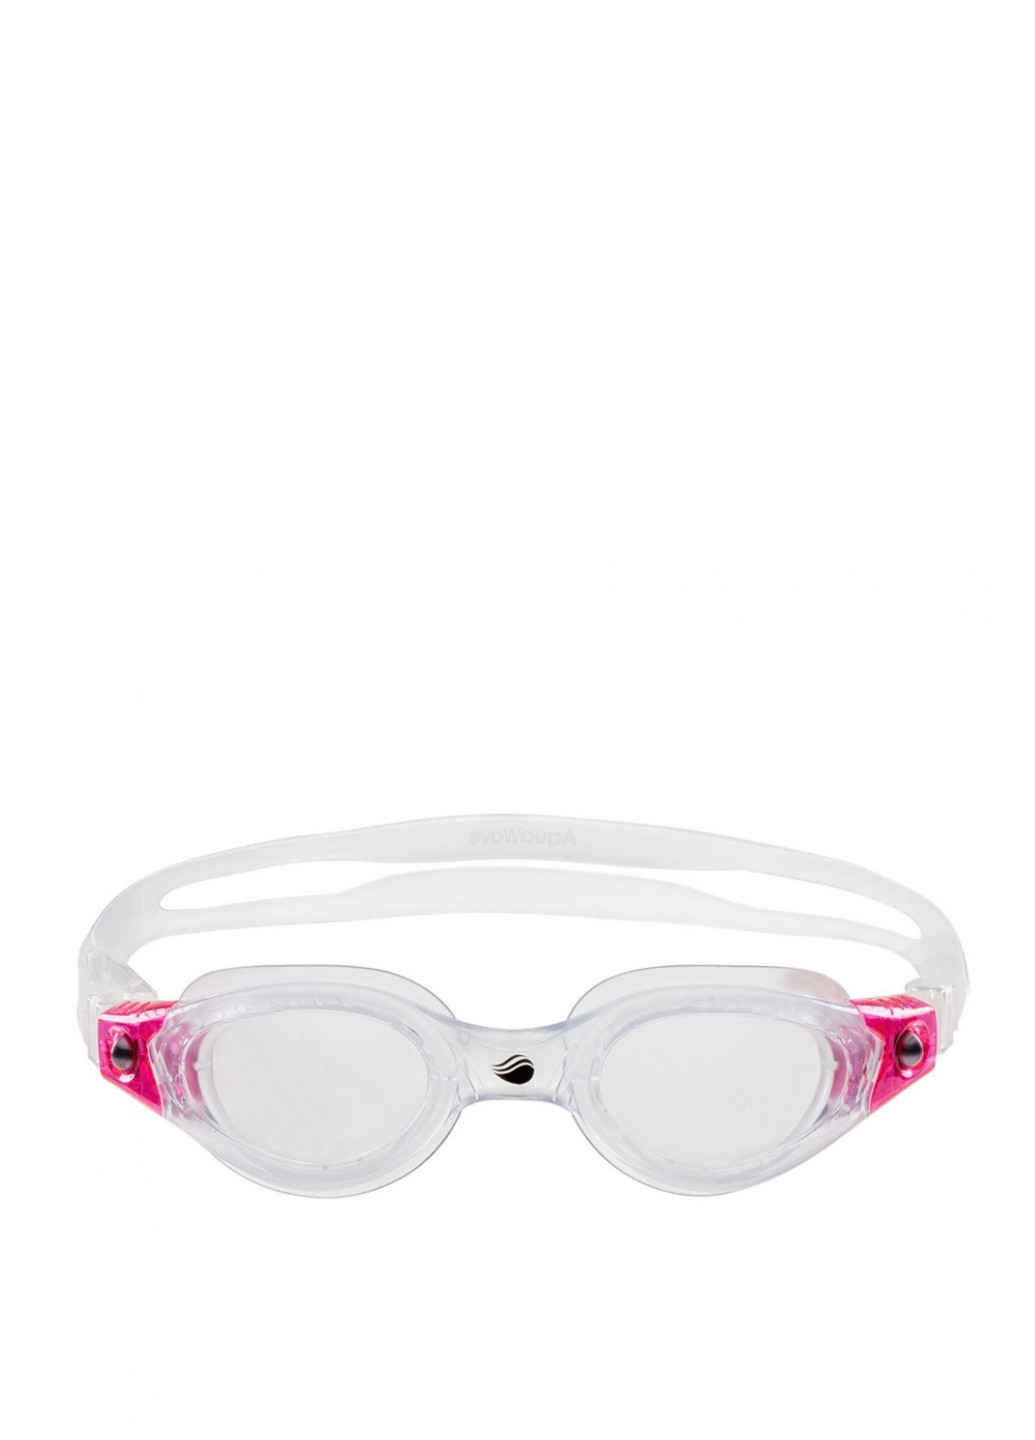 Окуляри для плавання AquaWave visio-transparent/pink (219151565)